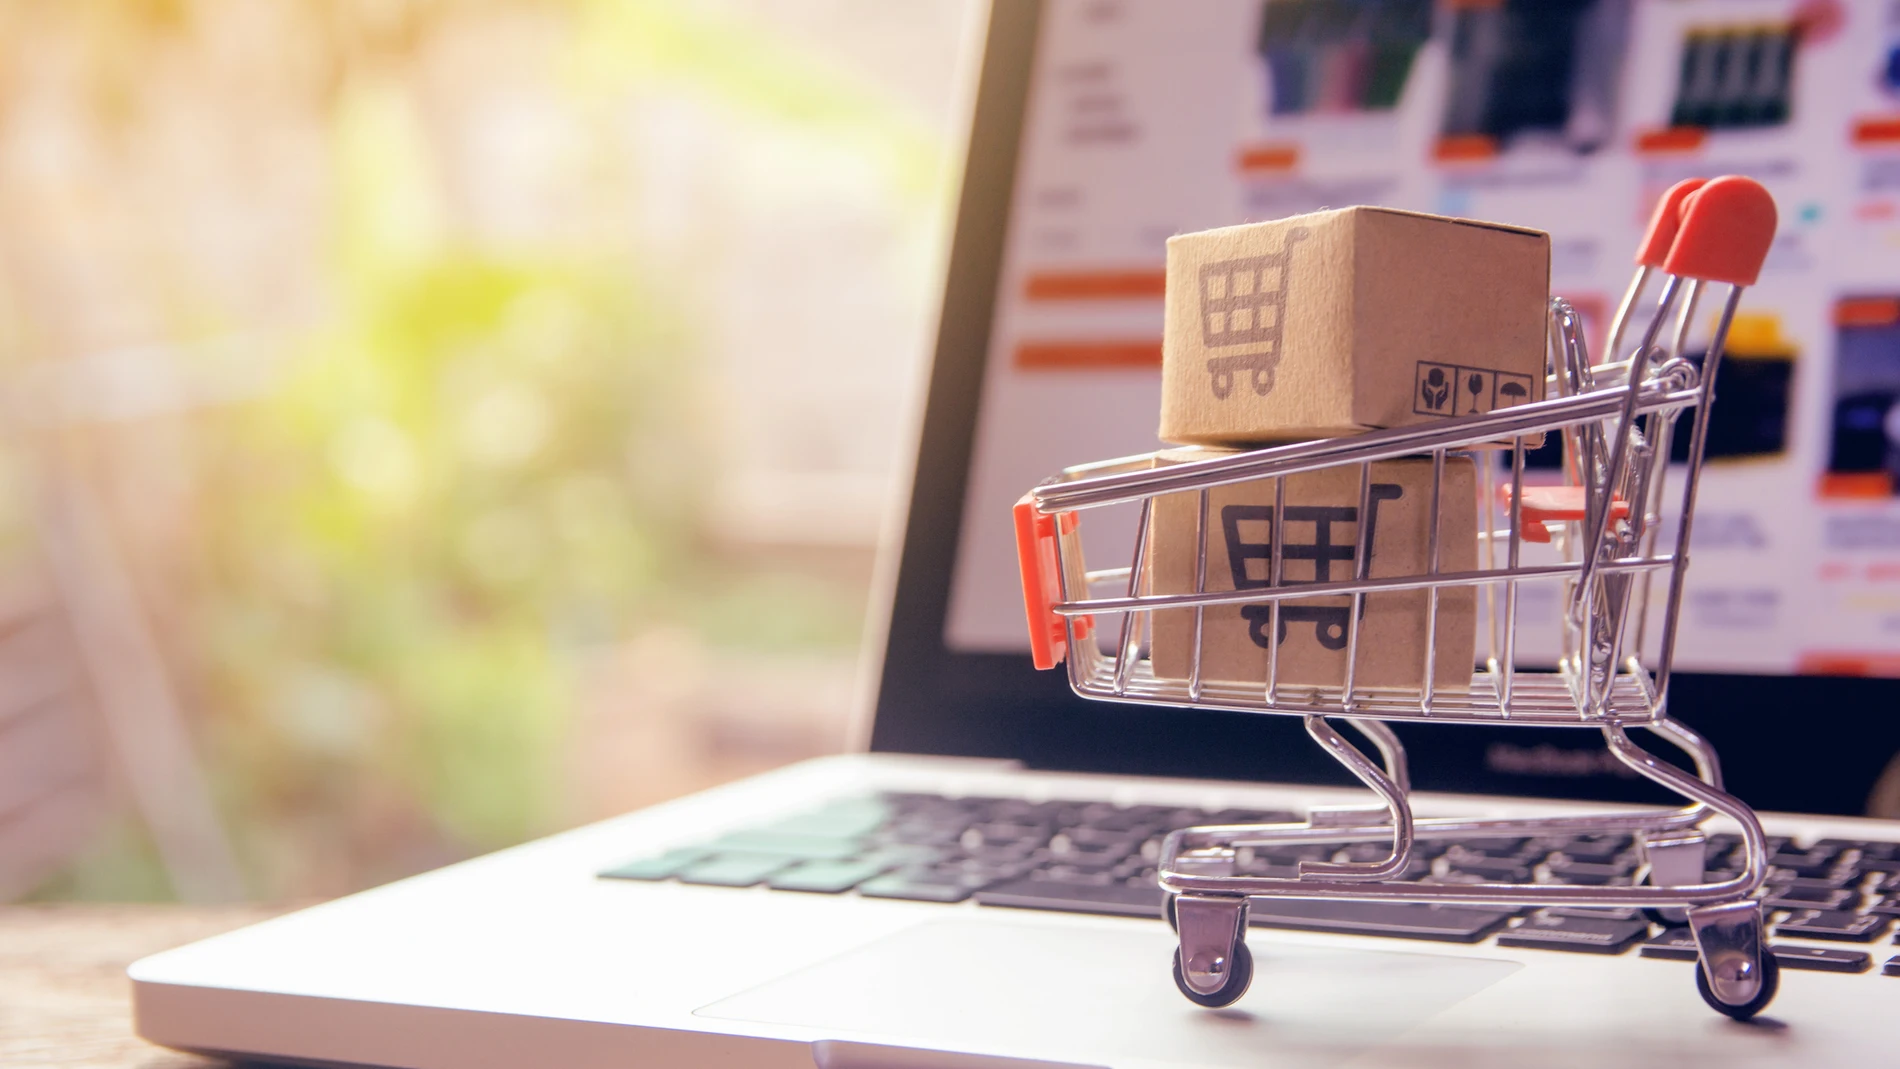 Carrefour te euros gratis en primera compra online: ¡aprovecha